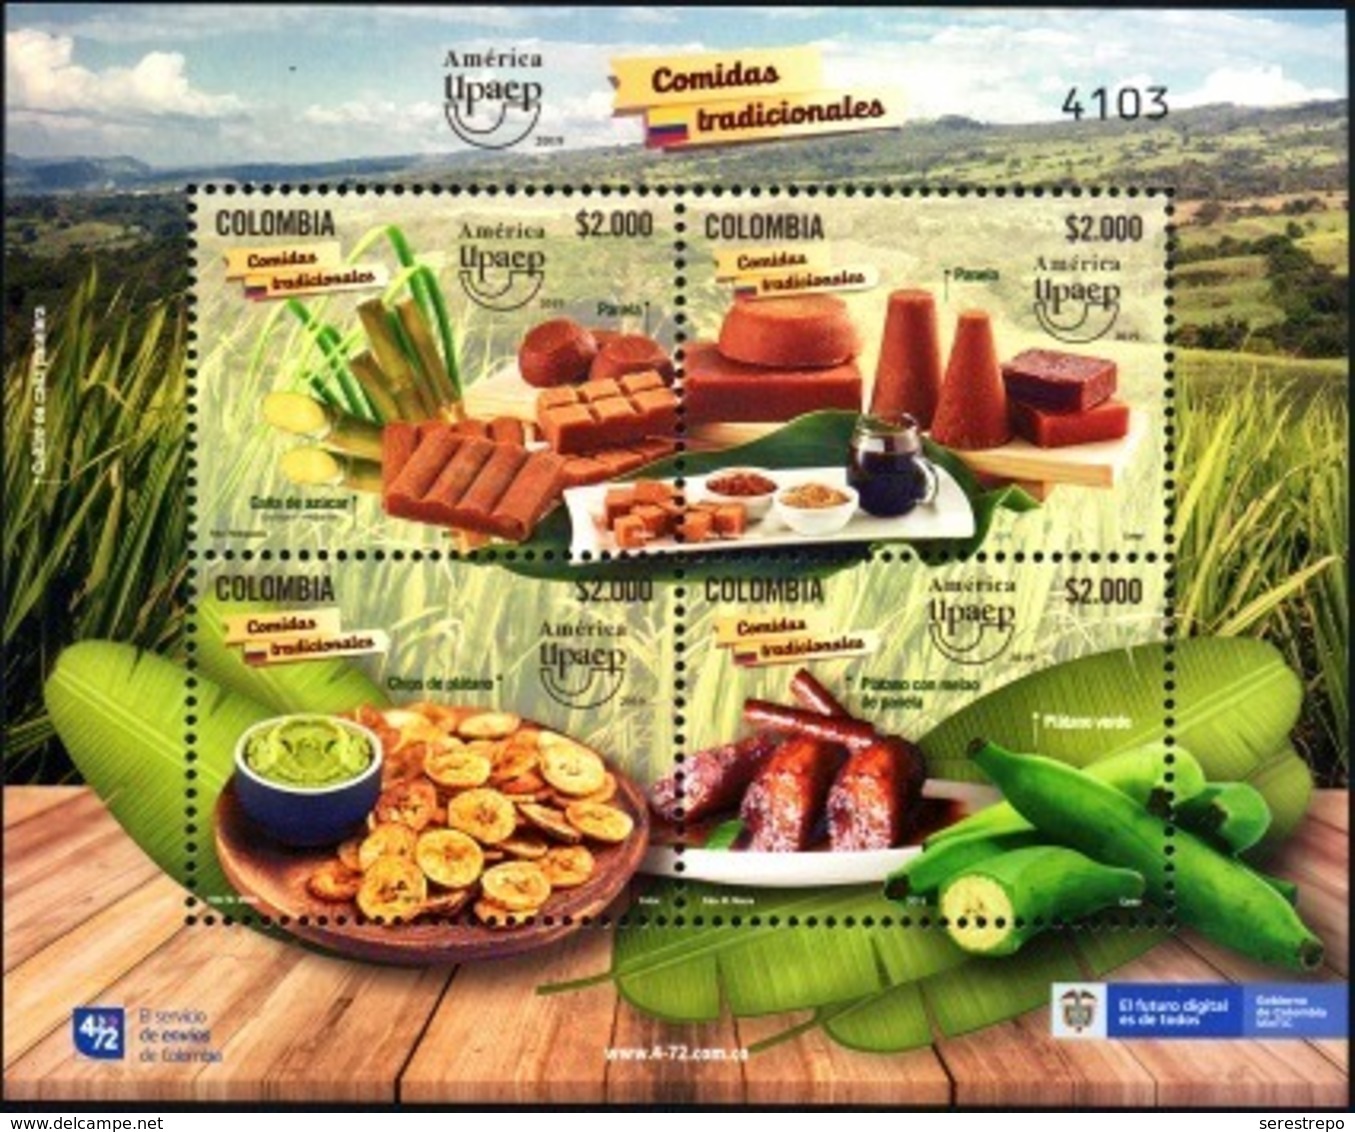 COLOMBIA CO051:54.19.10.09 [HF100-3094:3097-HF:6 ] América UPAEP 2019 Comidas Tradicionales - Souvenir Sheet New - Colombia